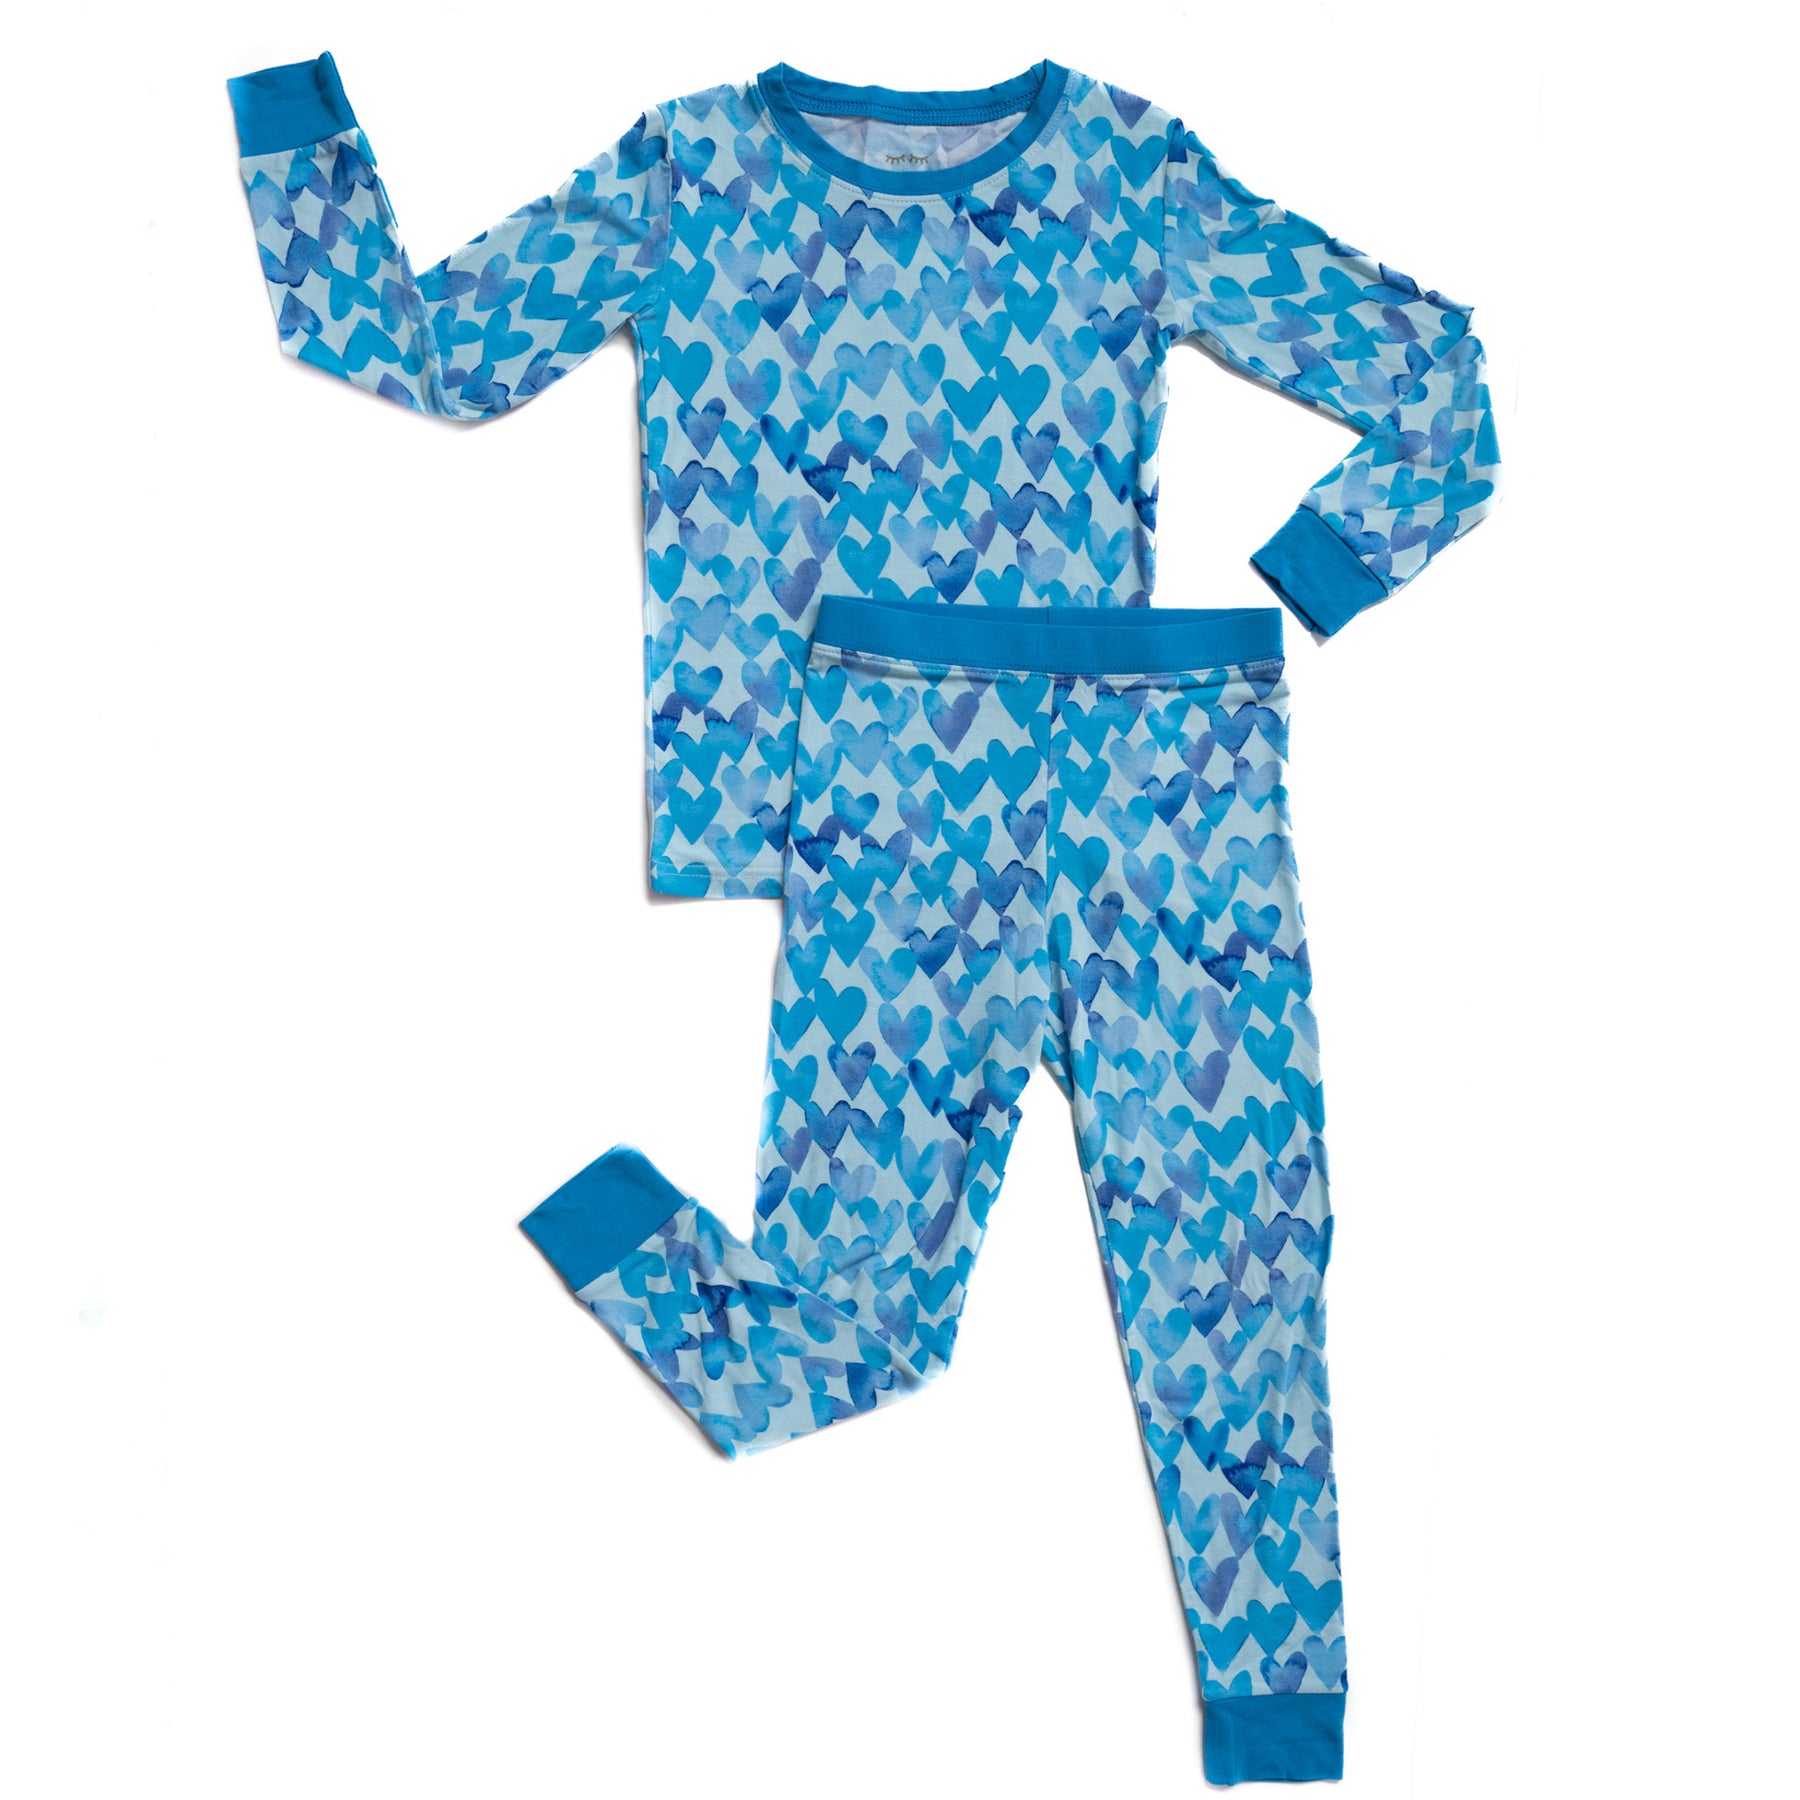 NIP - LATUZA teal blue Long Sleeves Bamboo Pajama Set - Small